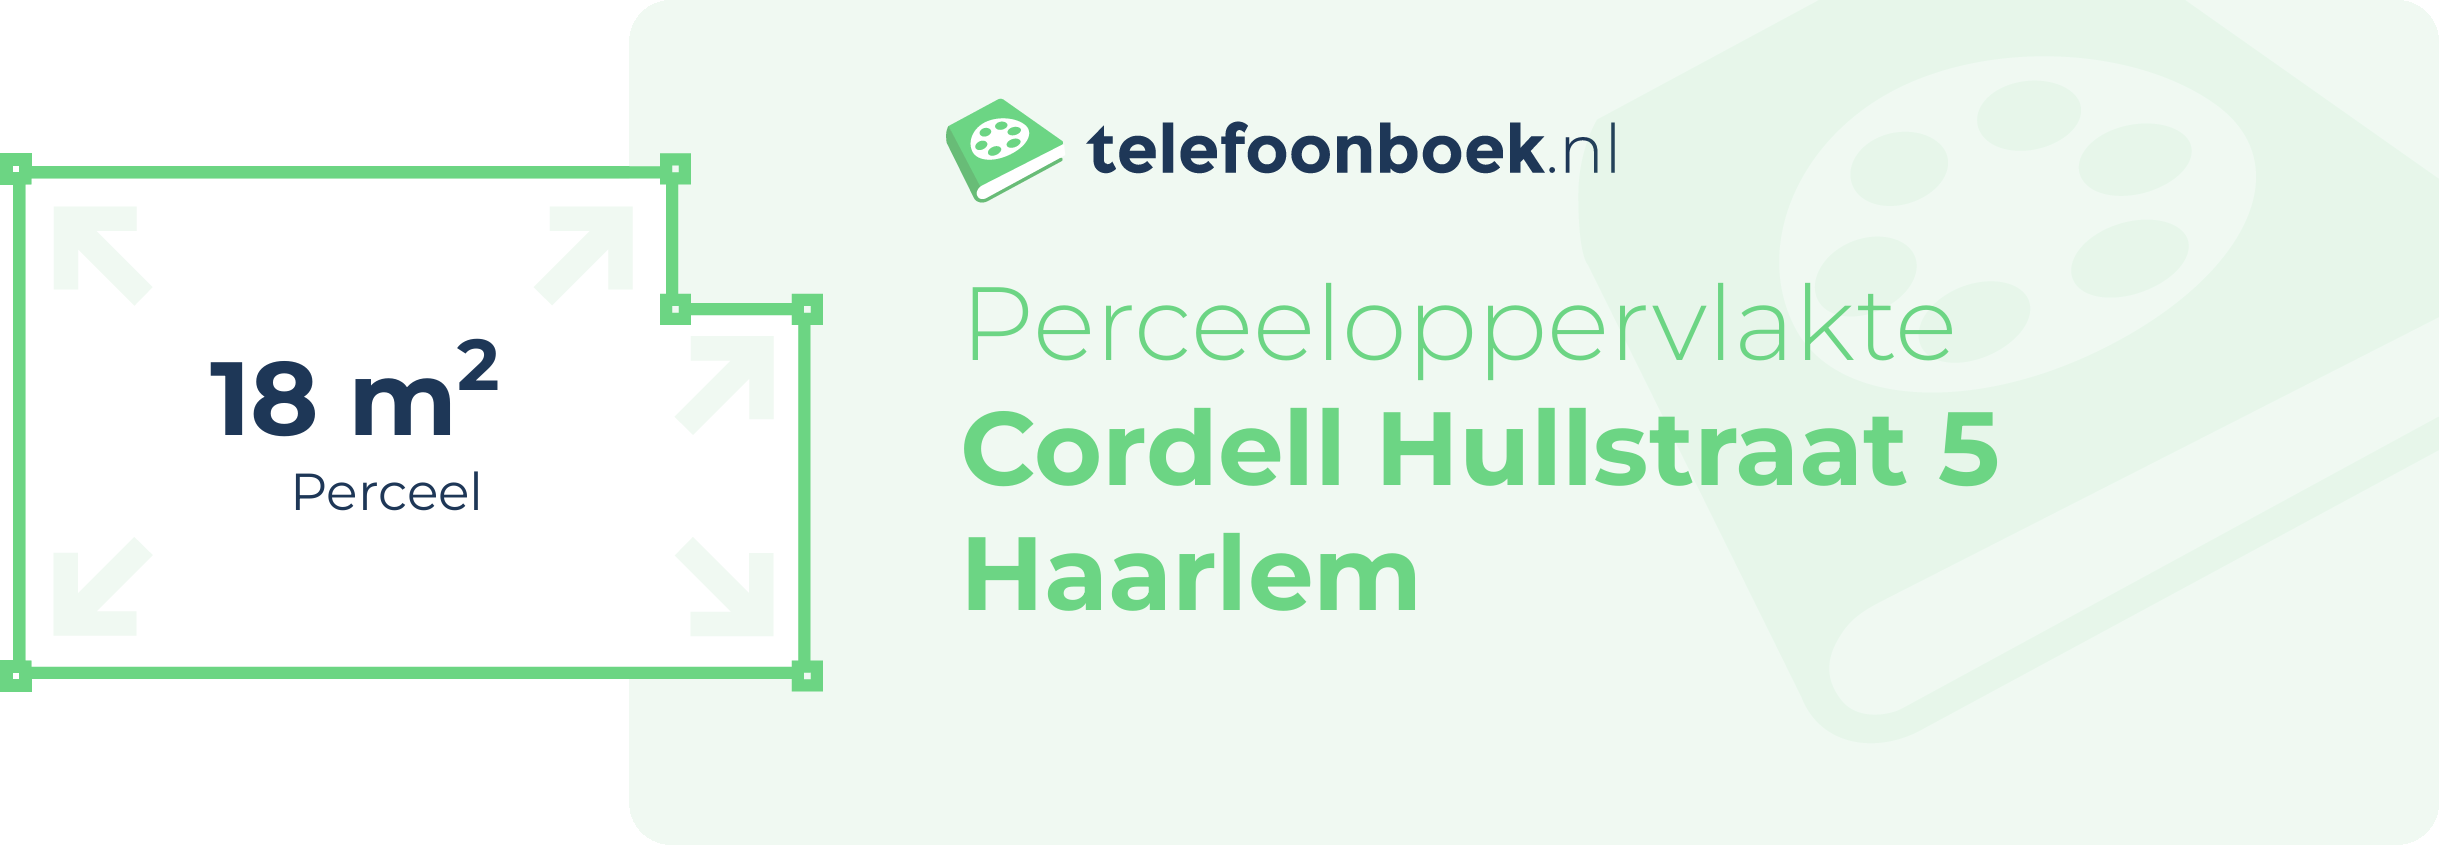 Perceeloppervlakte Cordell Hullstraat 5 Haarlem